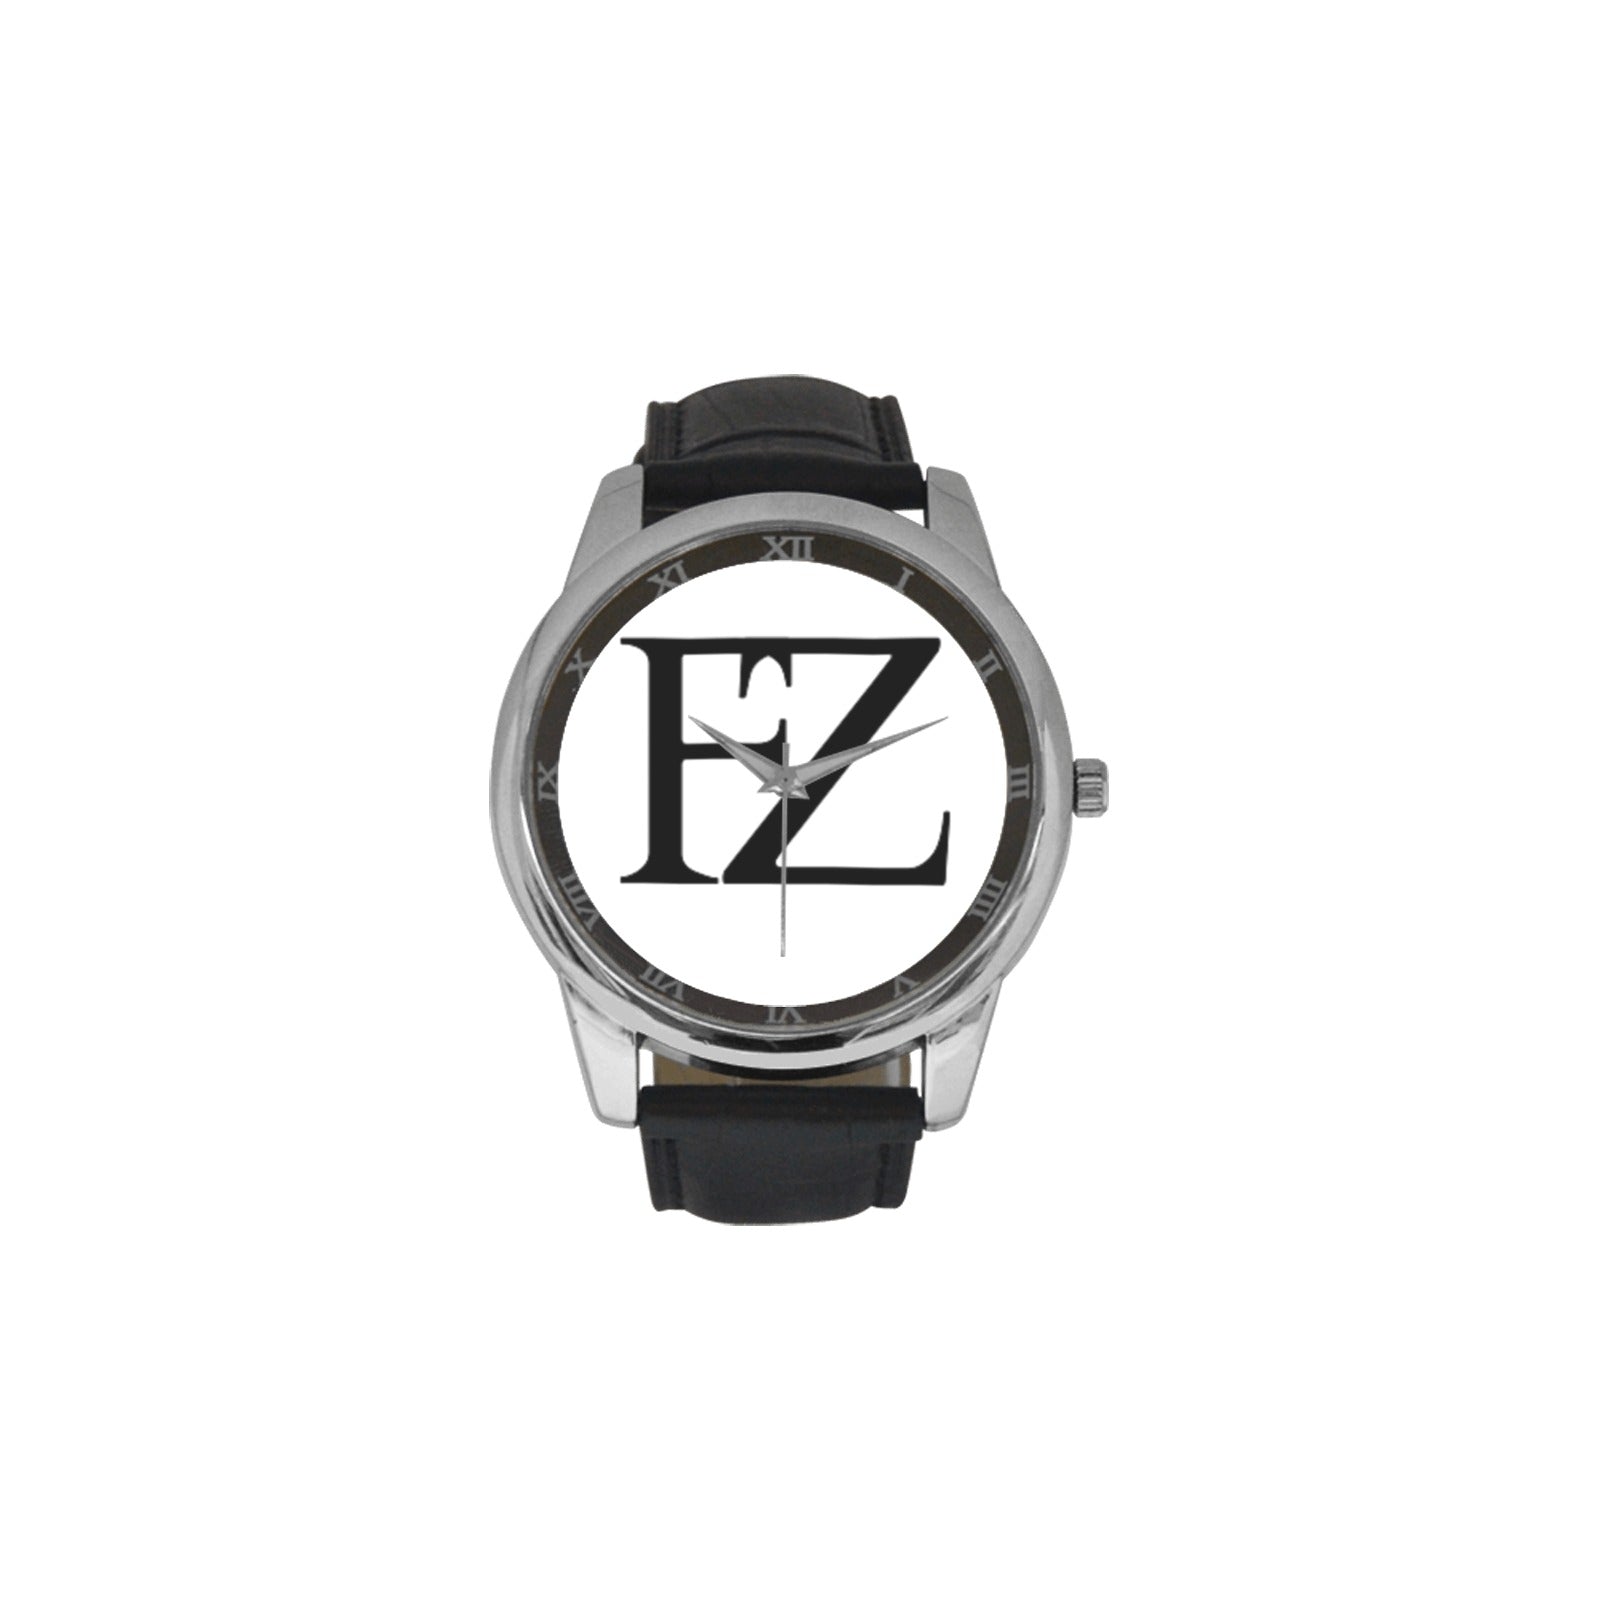 fz original watch - white men's leather strap large dial watch (model 213)